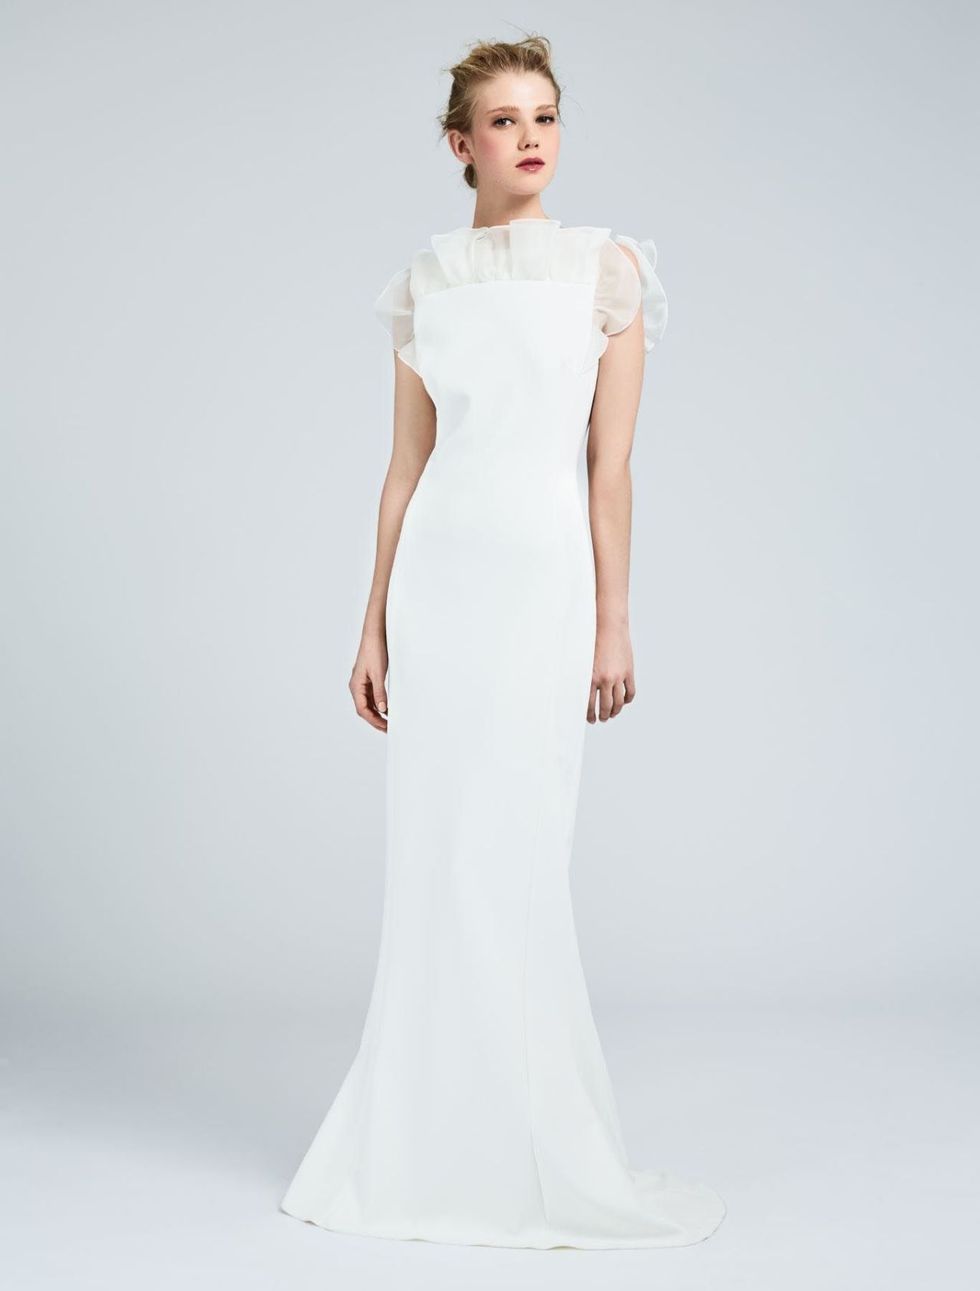 Gown, Clothing, Dress, Fashion model, Wedding dress, White, Bridal clothing, Shoulder, Bridal party dress, Neck, 